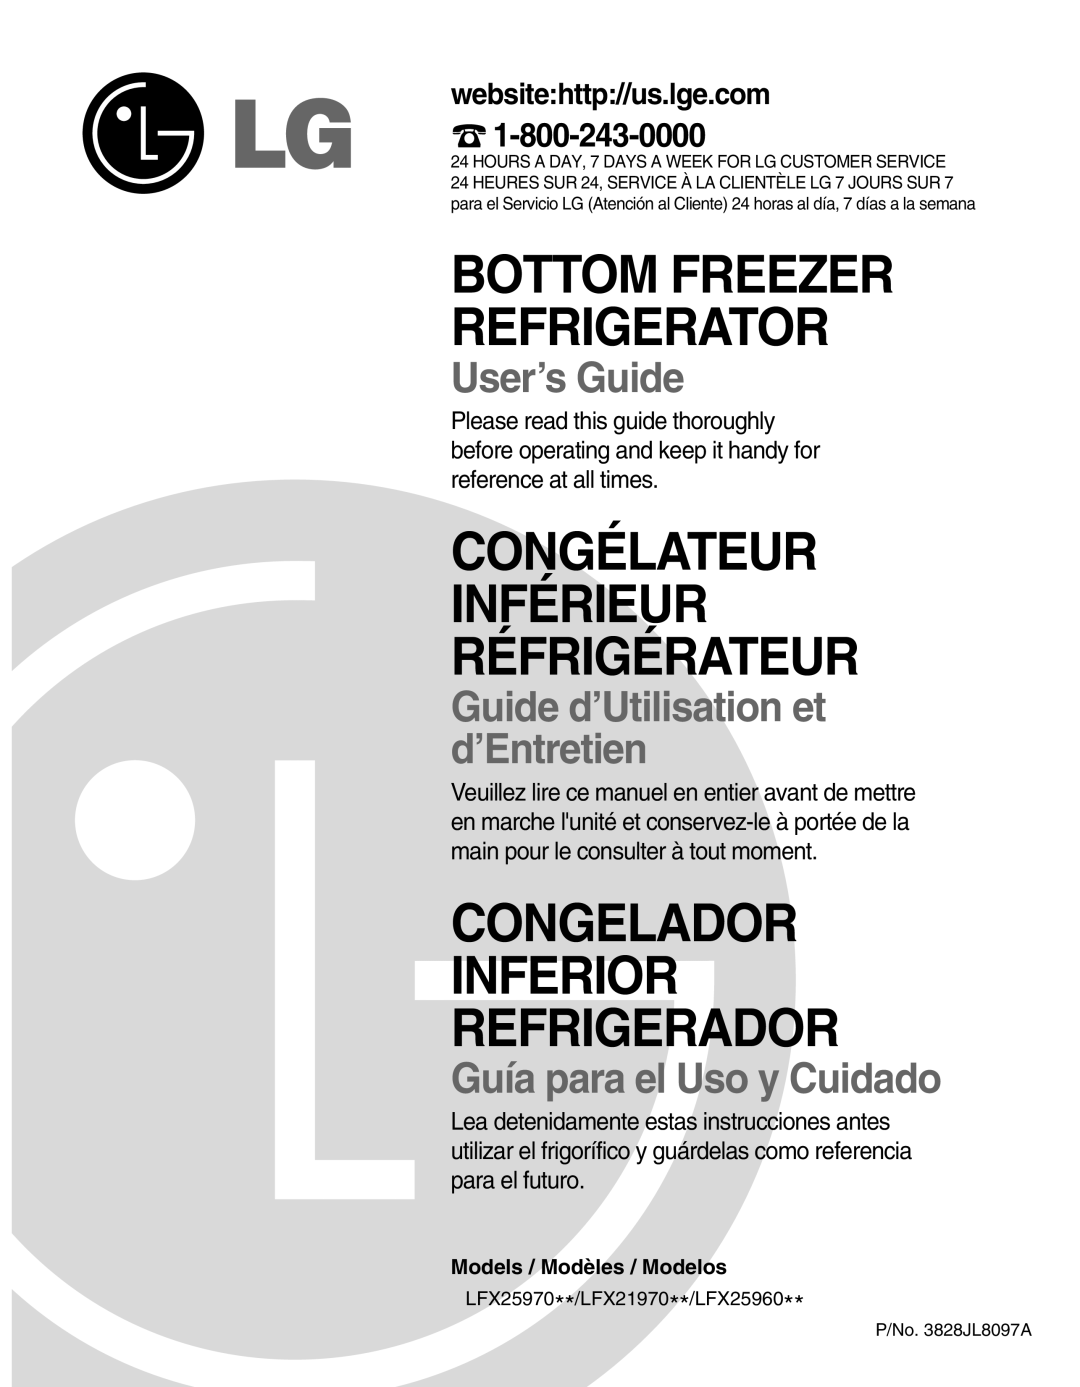 LG Electronics LFX25970 manual Congélateur Inférieur Réfrigérateur, Congelador Inferior Refrigerador, User’s Guide 